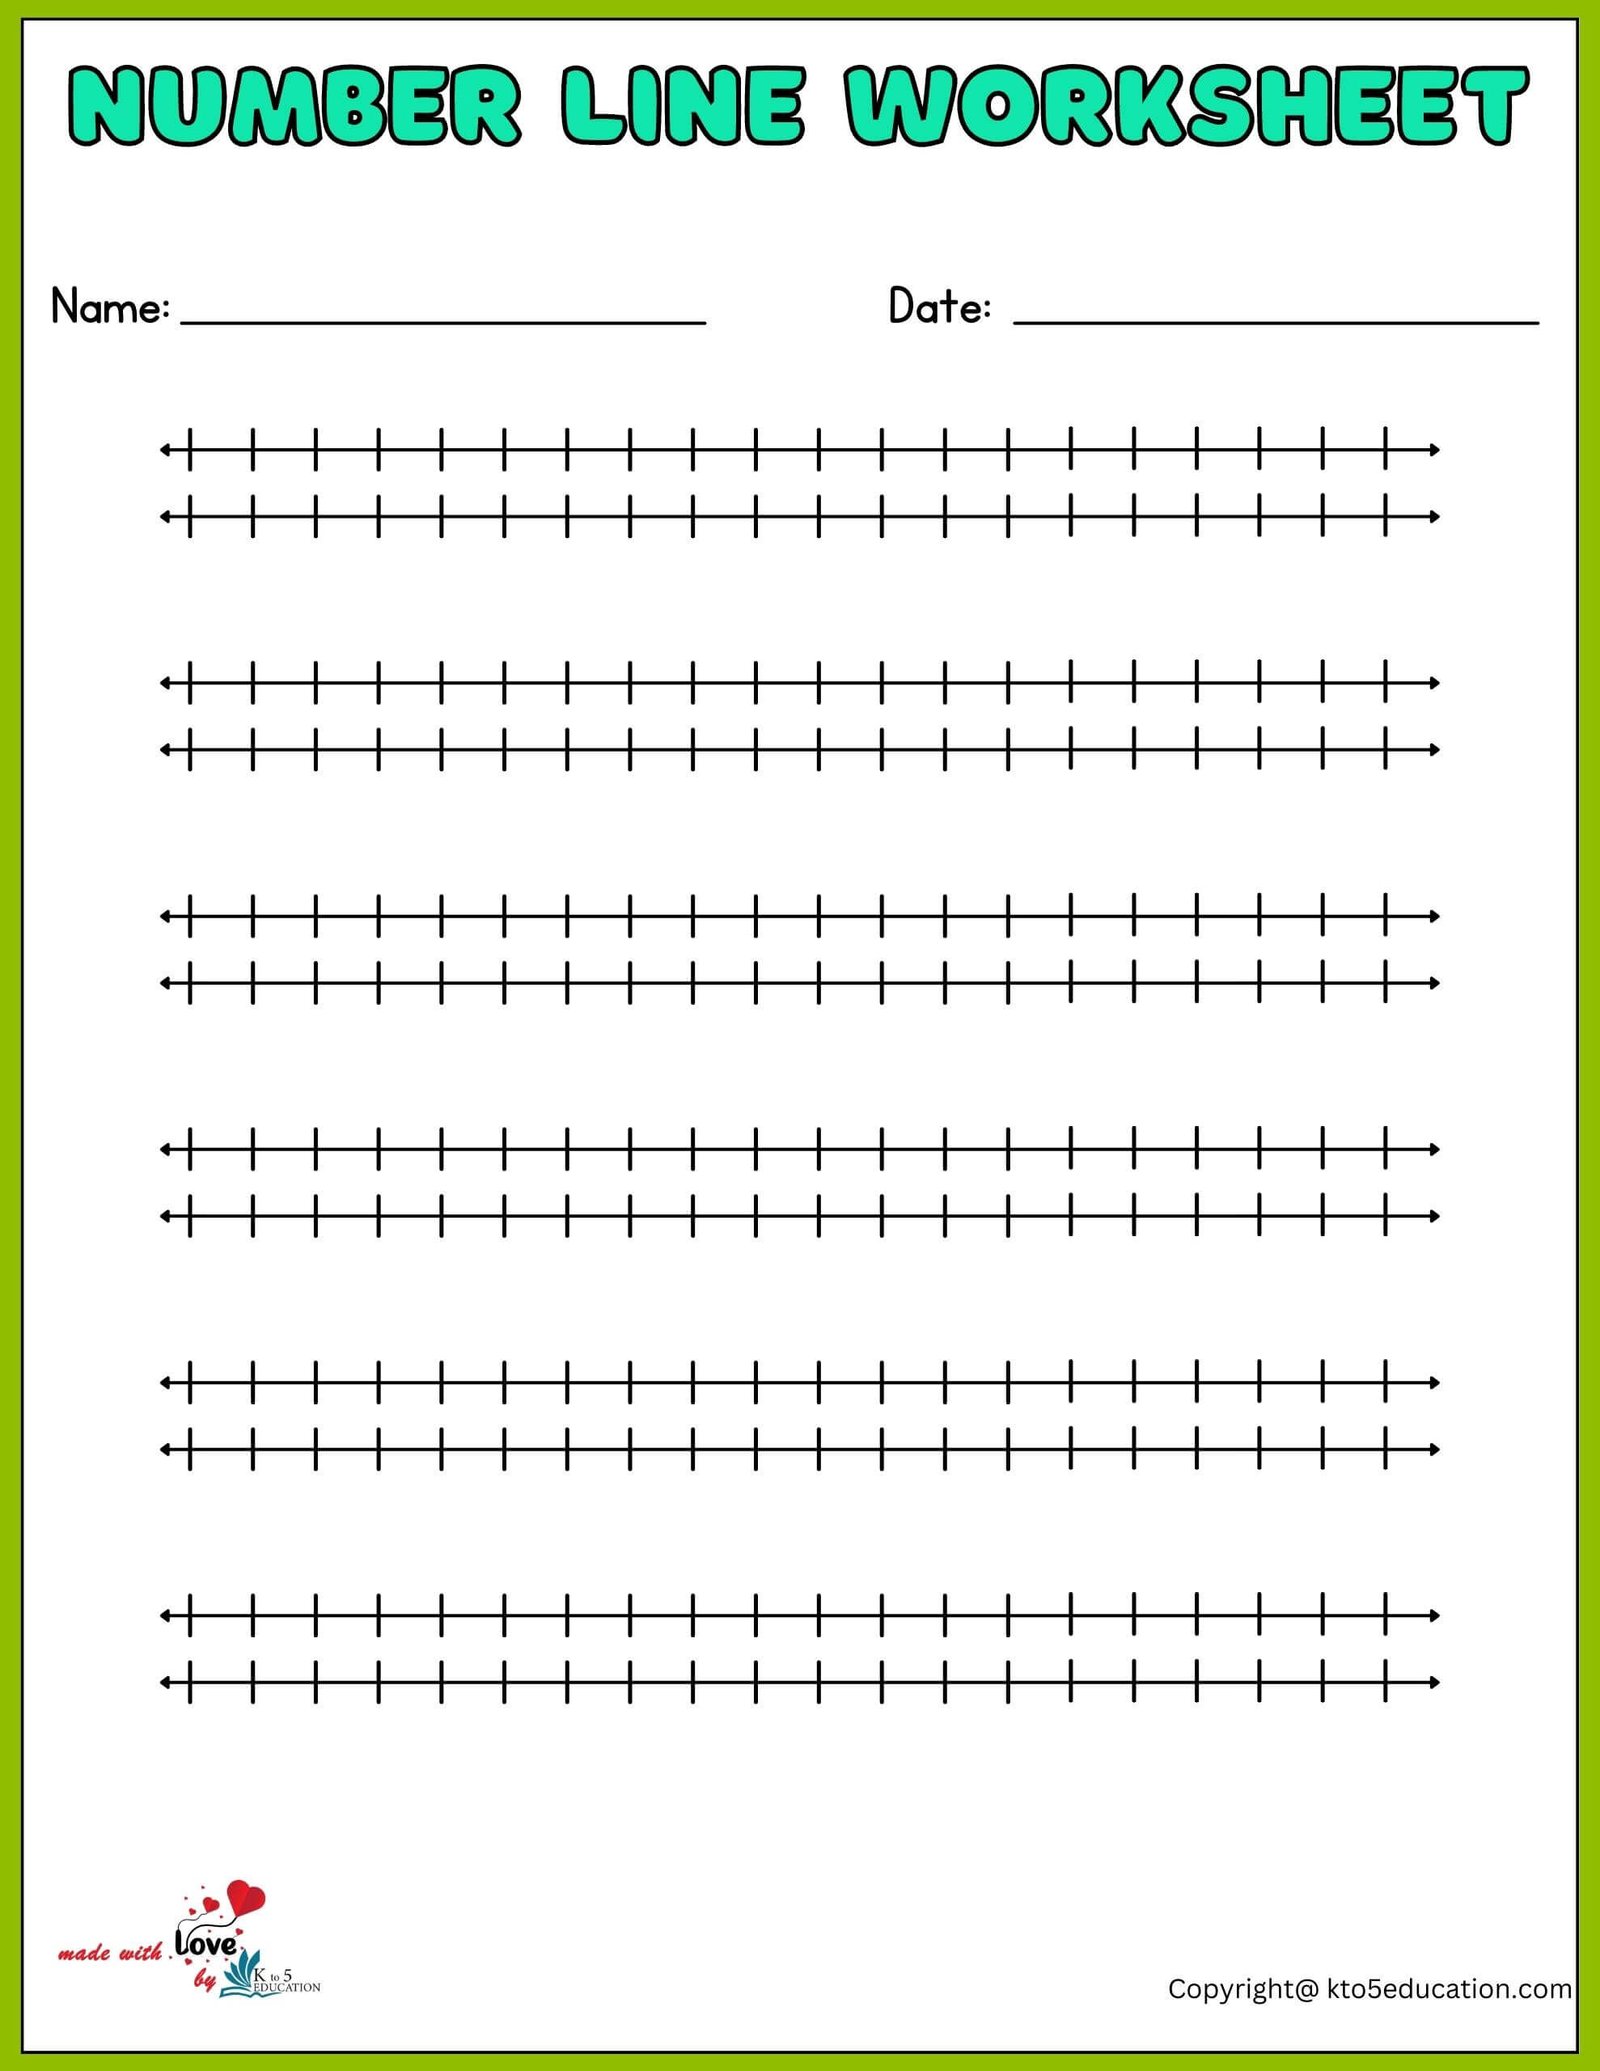 Double Number Line Worksheet 1-20